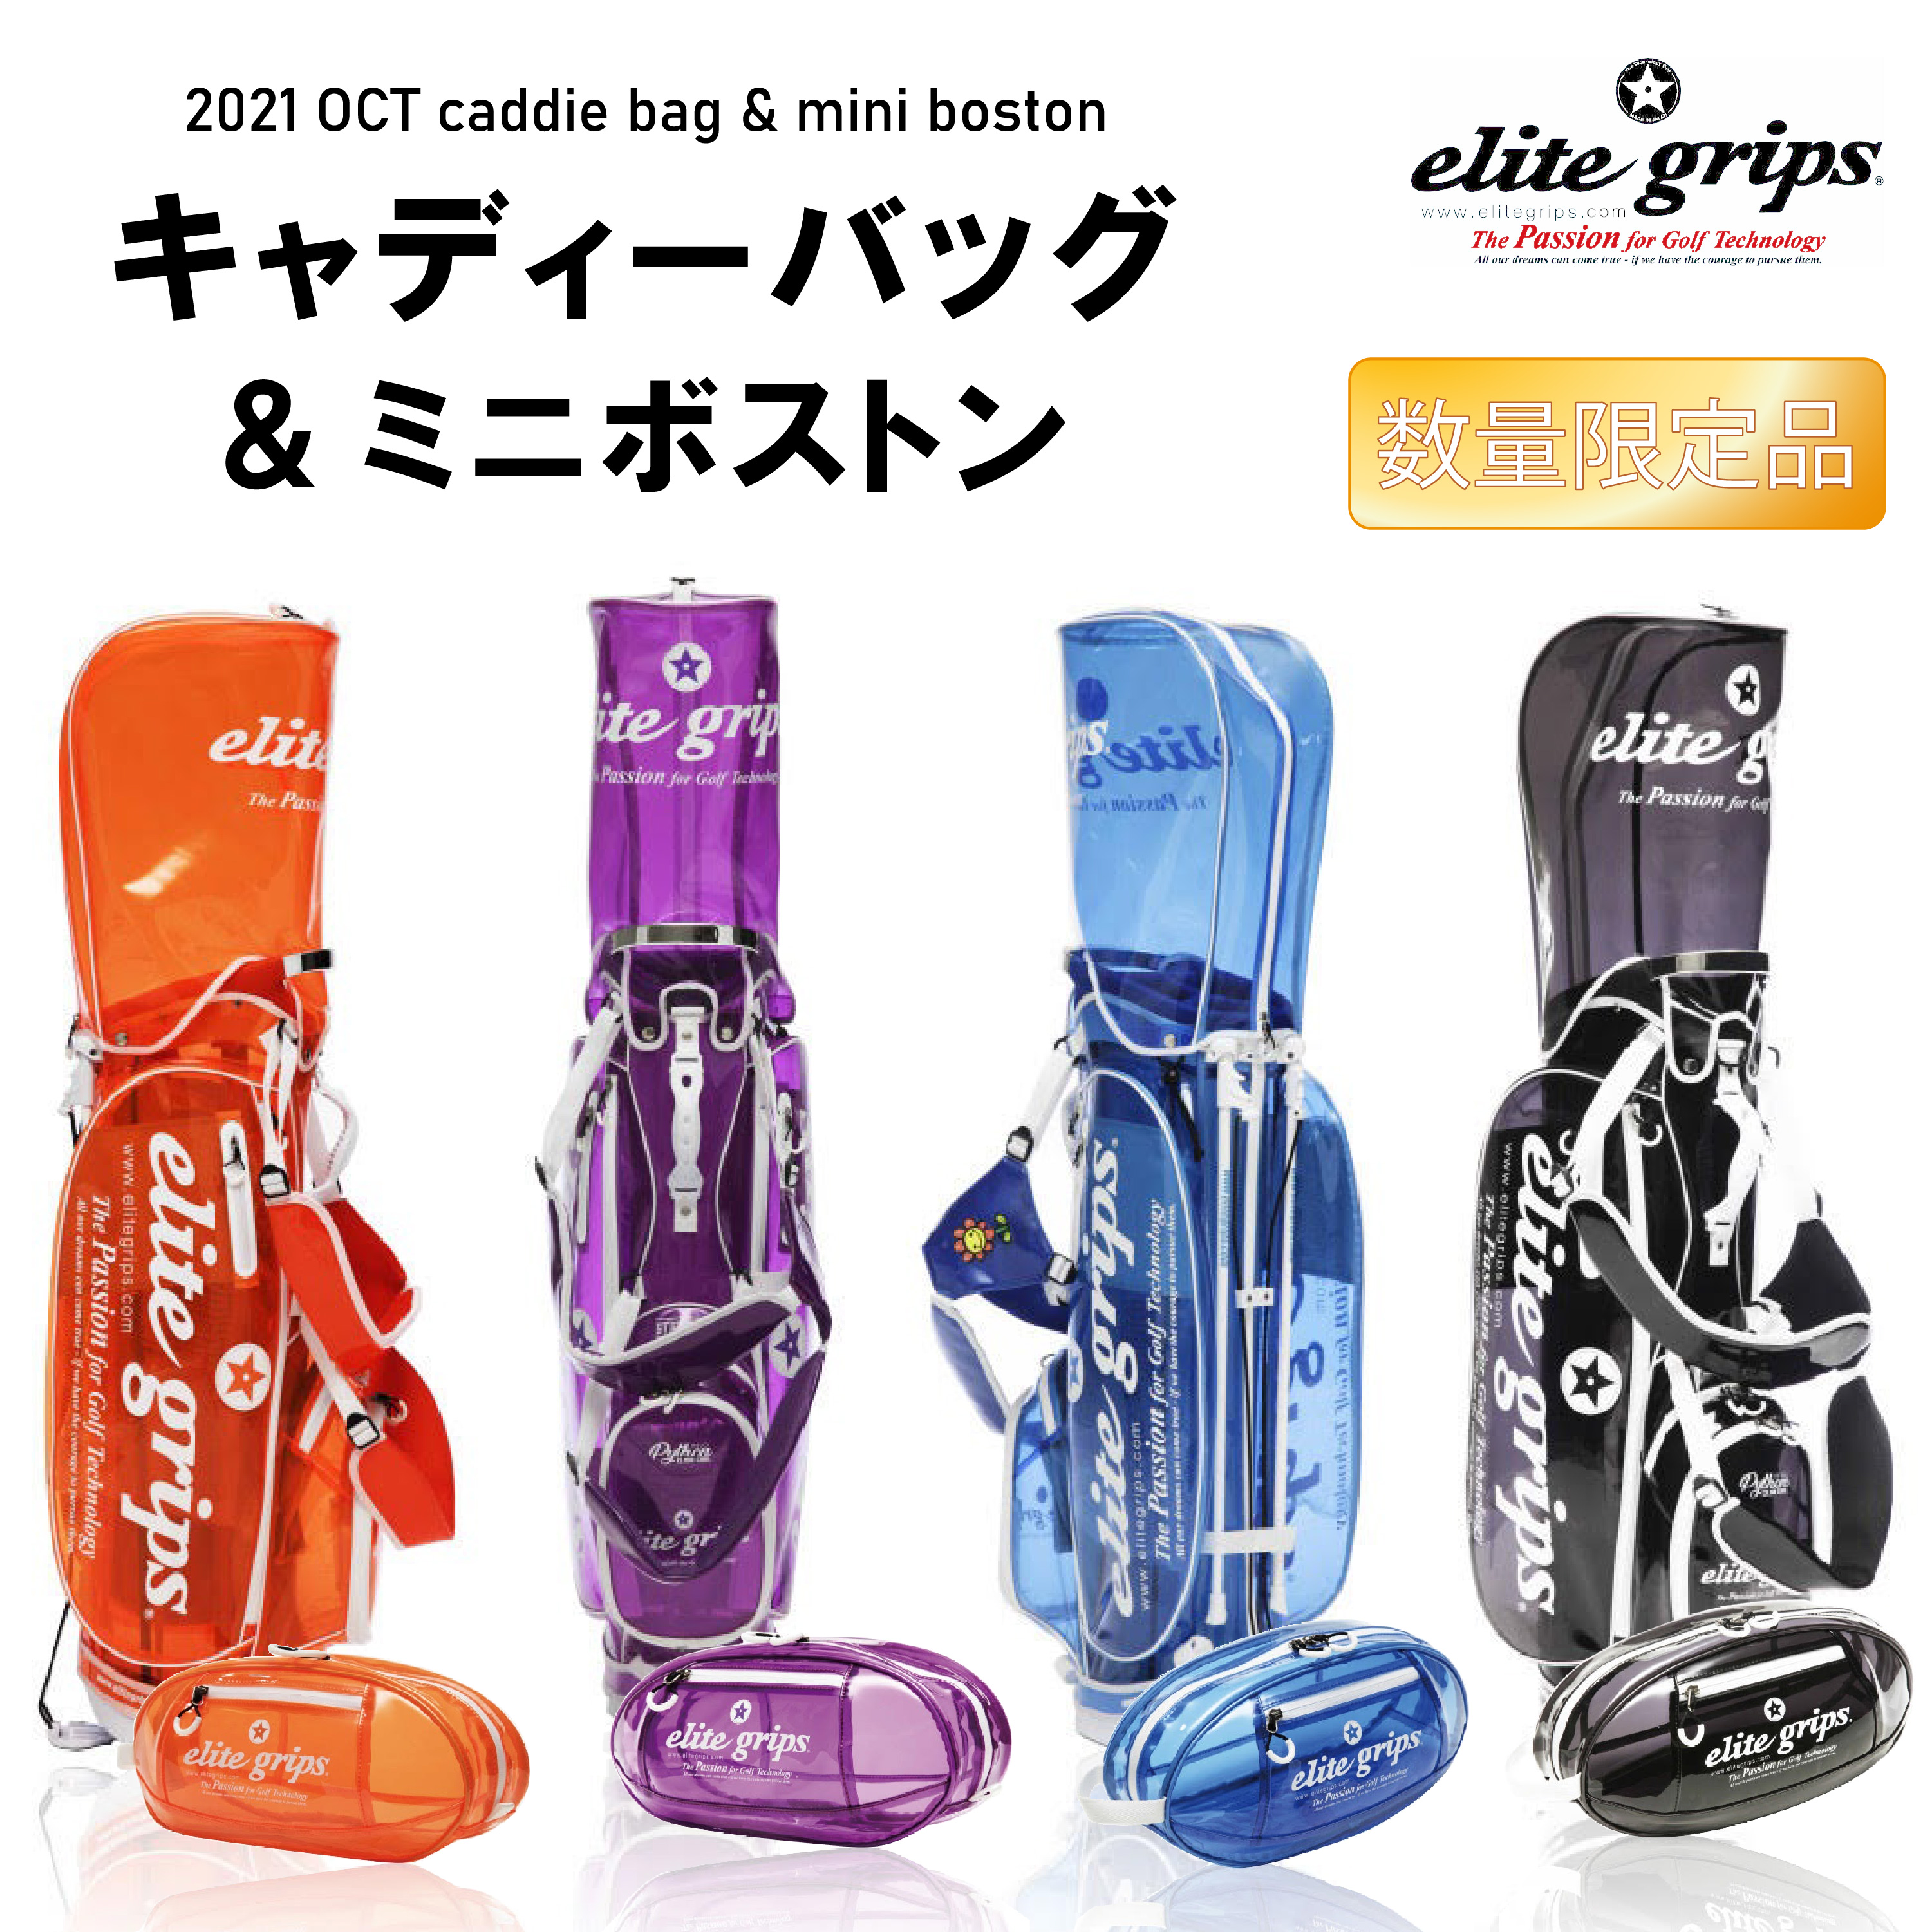 elite grips 2021 OCT caddie bag & mini boston set